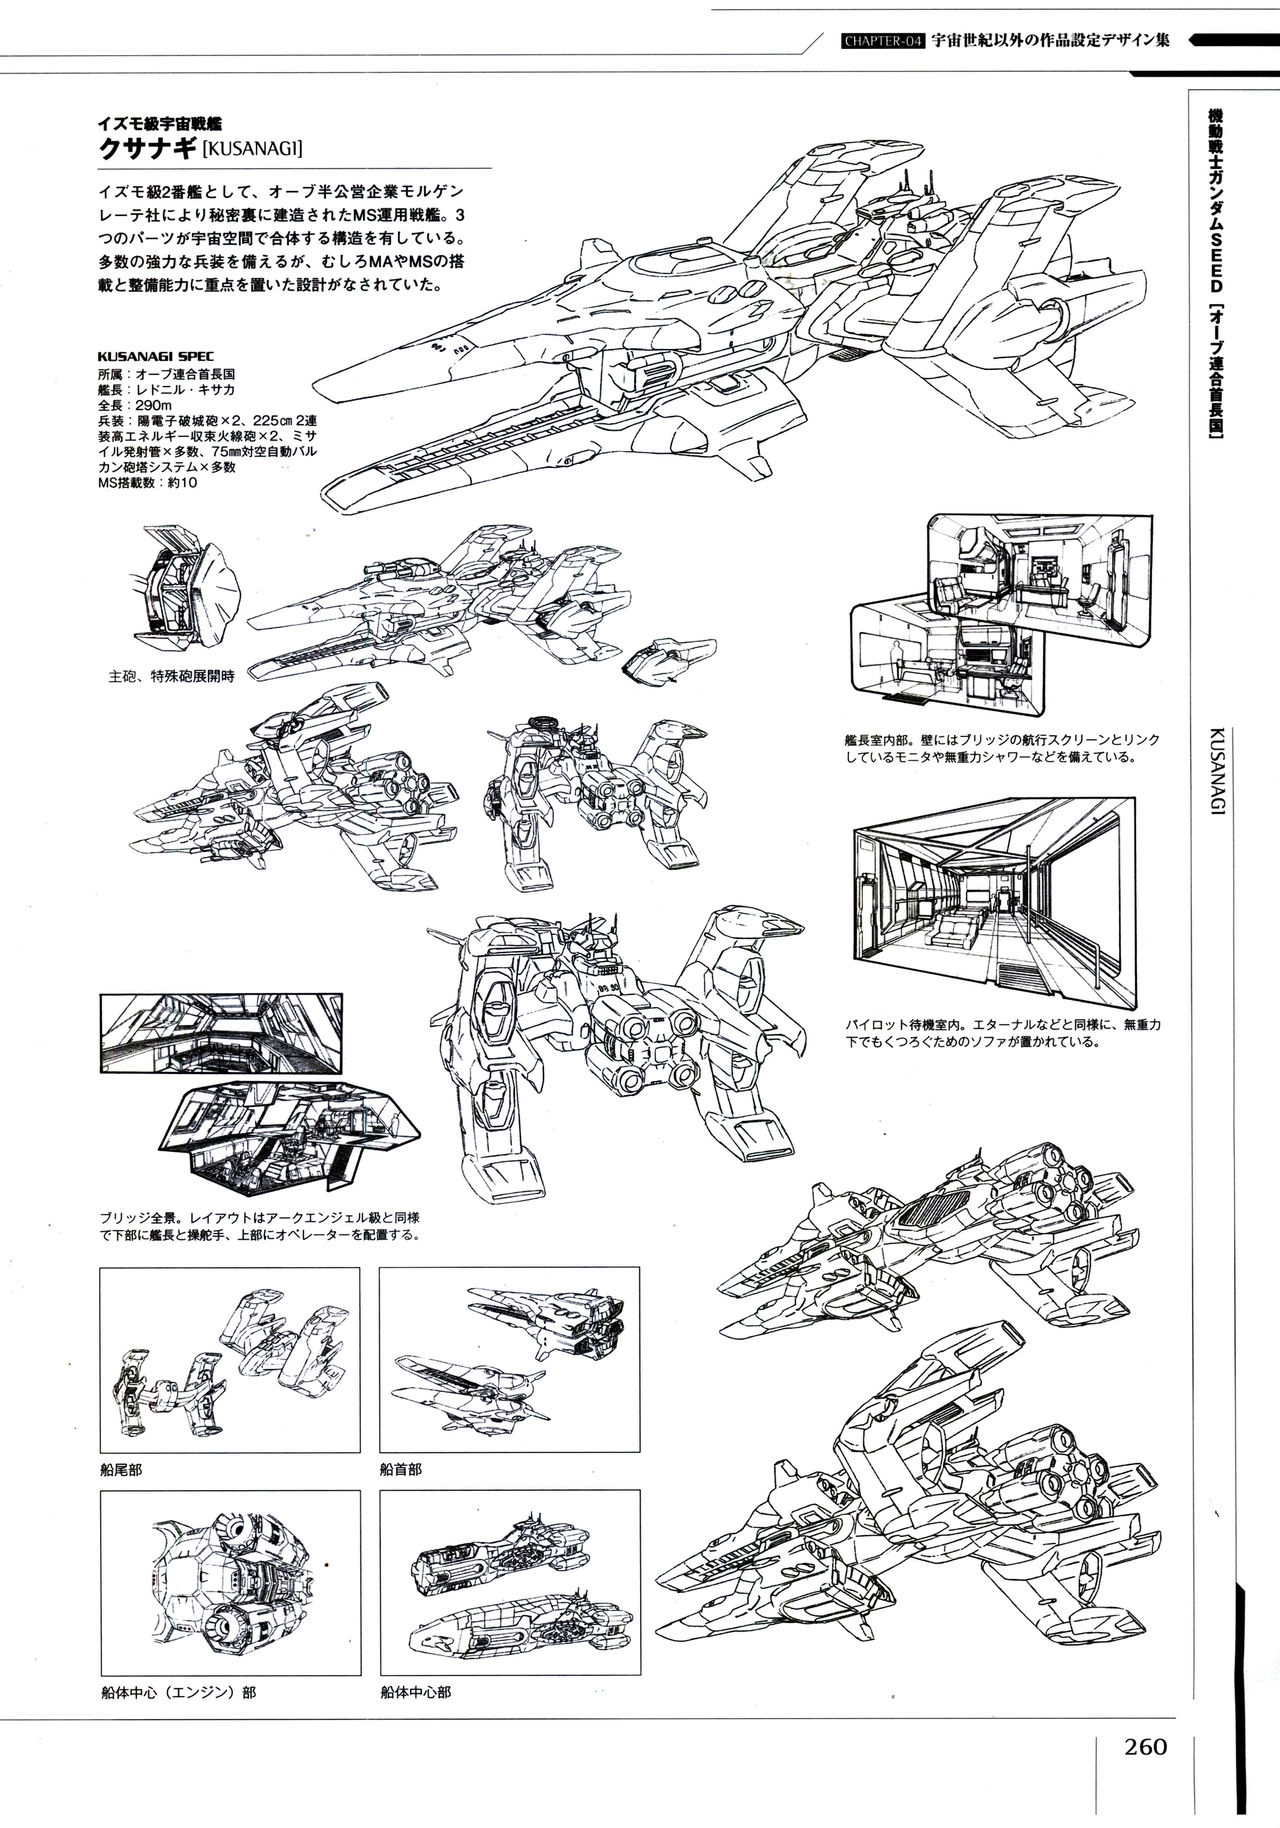 Mobile Suit Gundam - Ship & Aerospace Plane Encyclopedia - Revised Edition 265